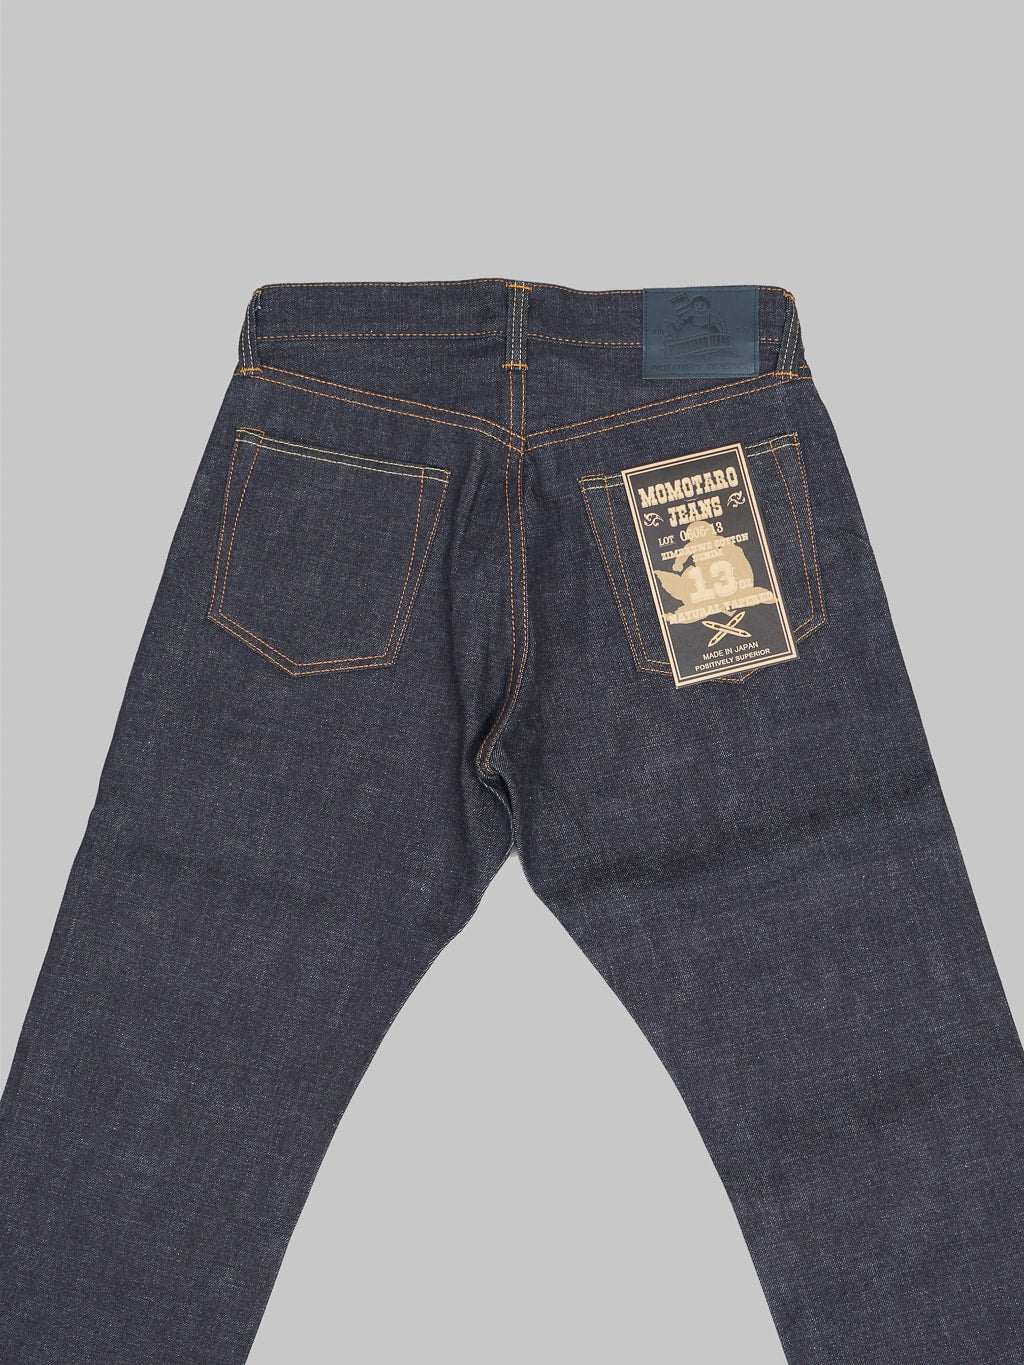 momotaro 0605 13 indigo jeans natural tapered 13oz made in japan